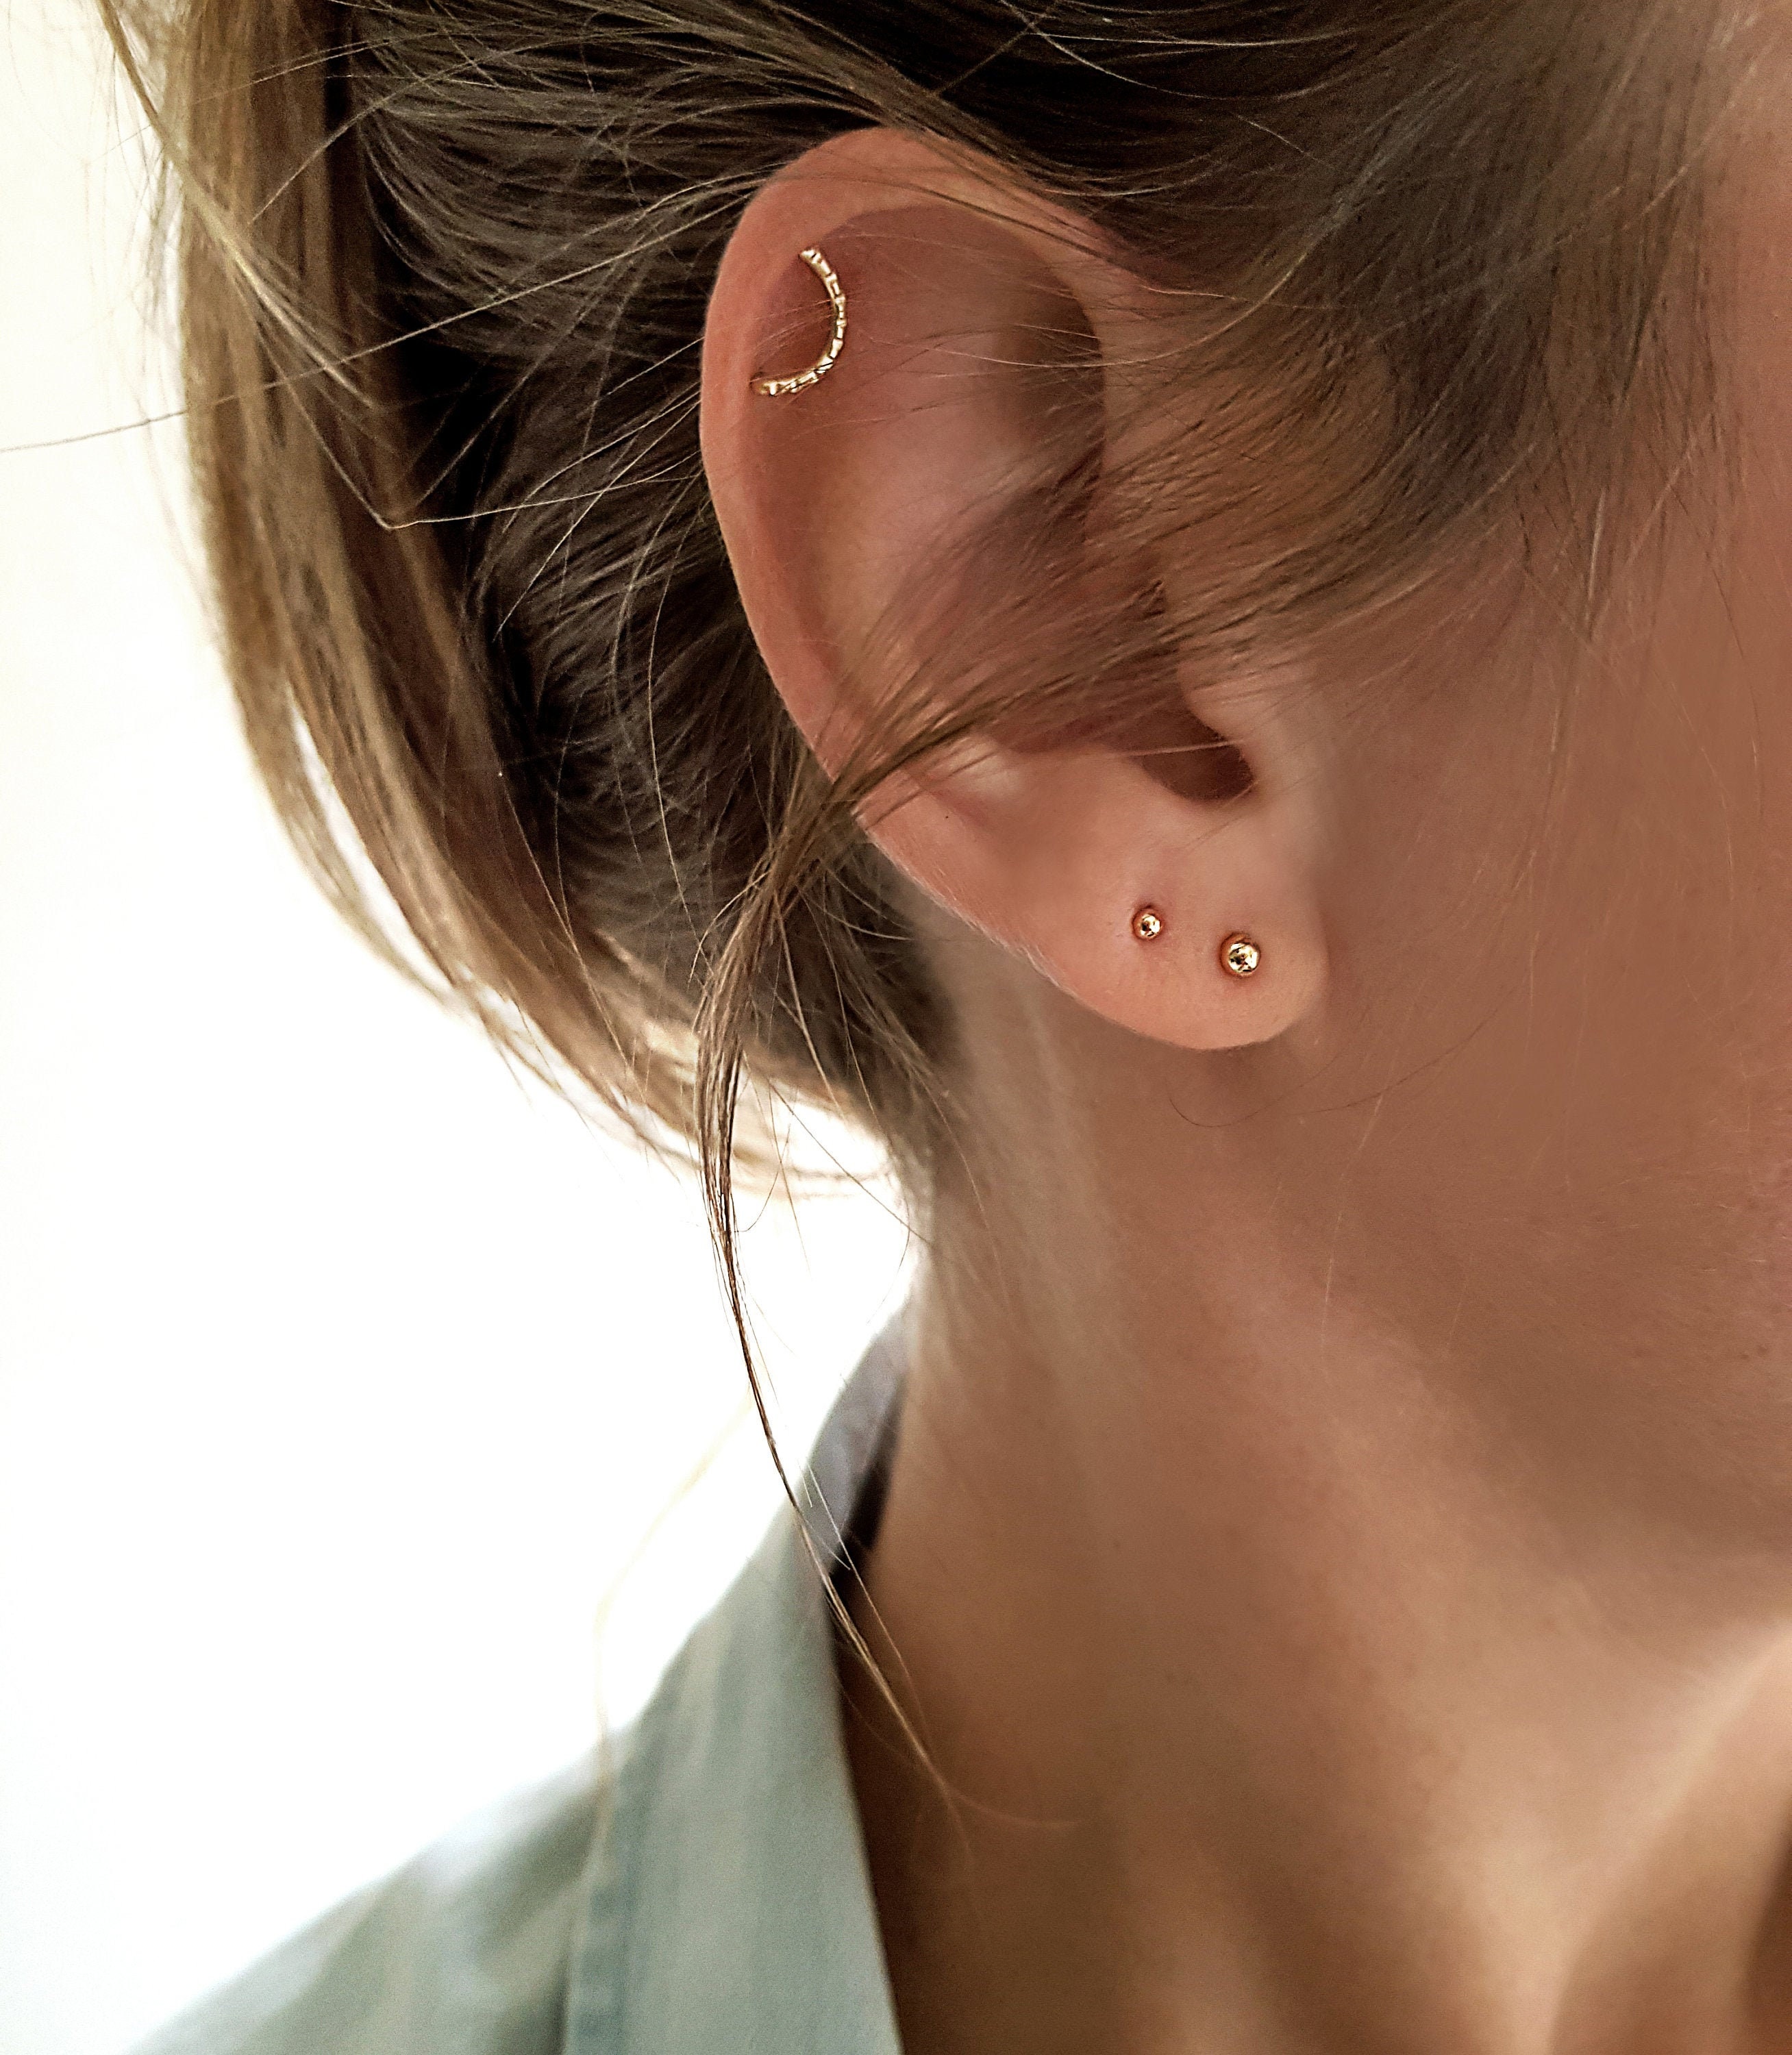 Amazon.com: Silver Cartilage Helix Earring - Handmade 925 Sterling Silver  Piercing Hoop - Hypoallergenic Thin 20 gauge 8mm Piercing Jewelry :  Handmade Products